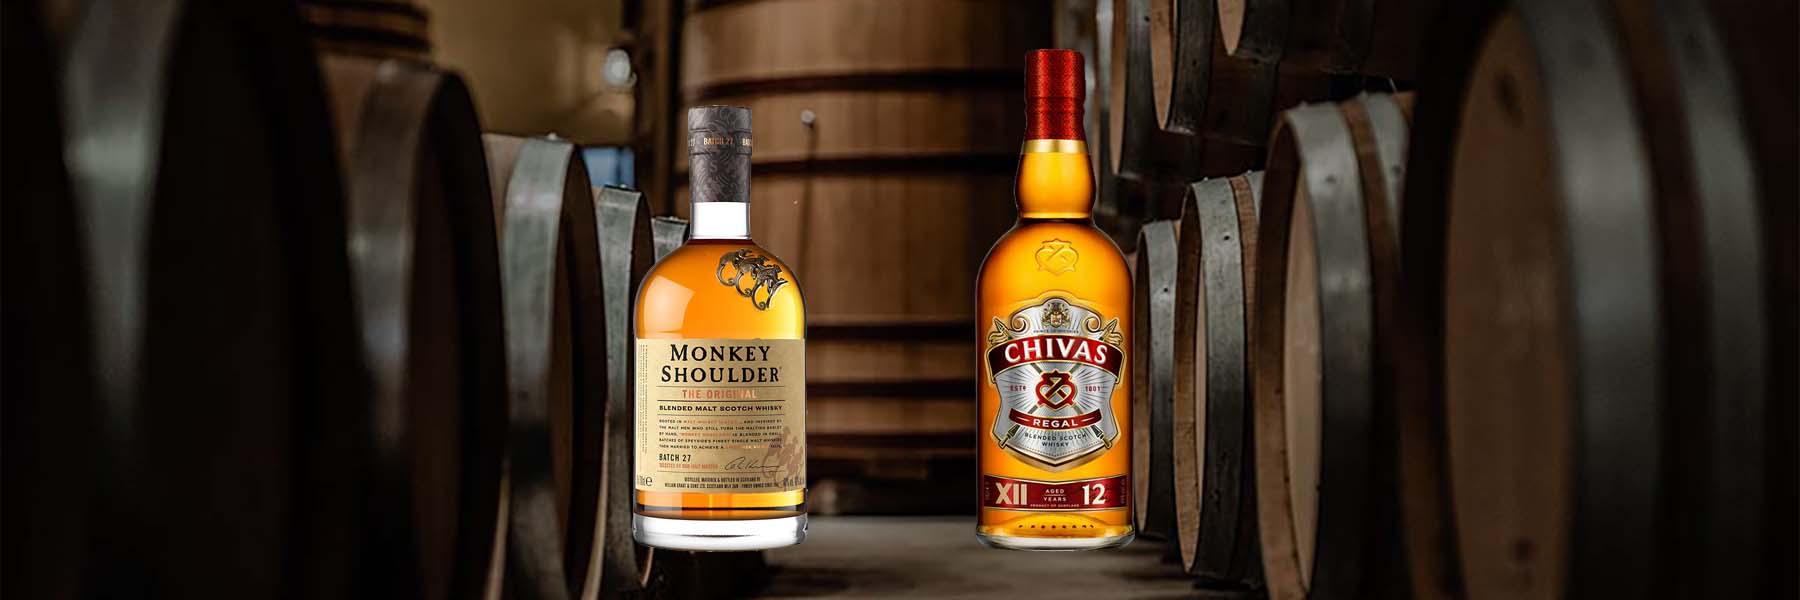 Monkey Shoulder vs Chivas Regal | Whisky Showdown: Comparing & Contrasting